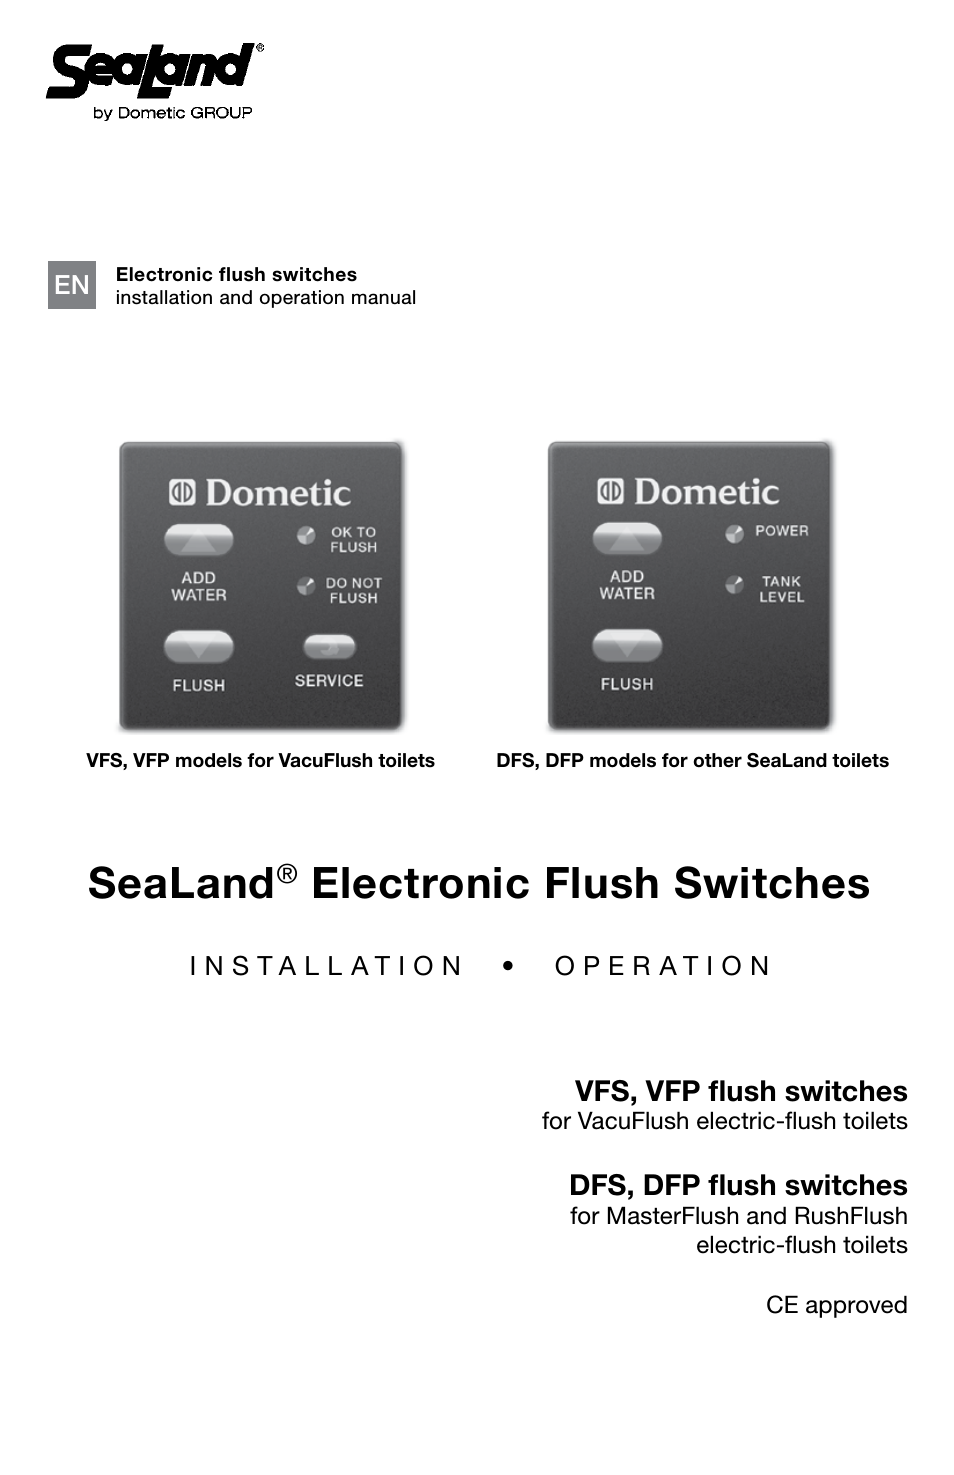 DFP flush switches